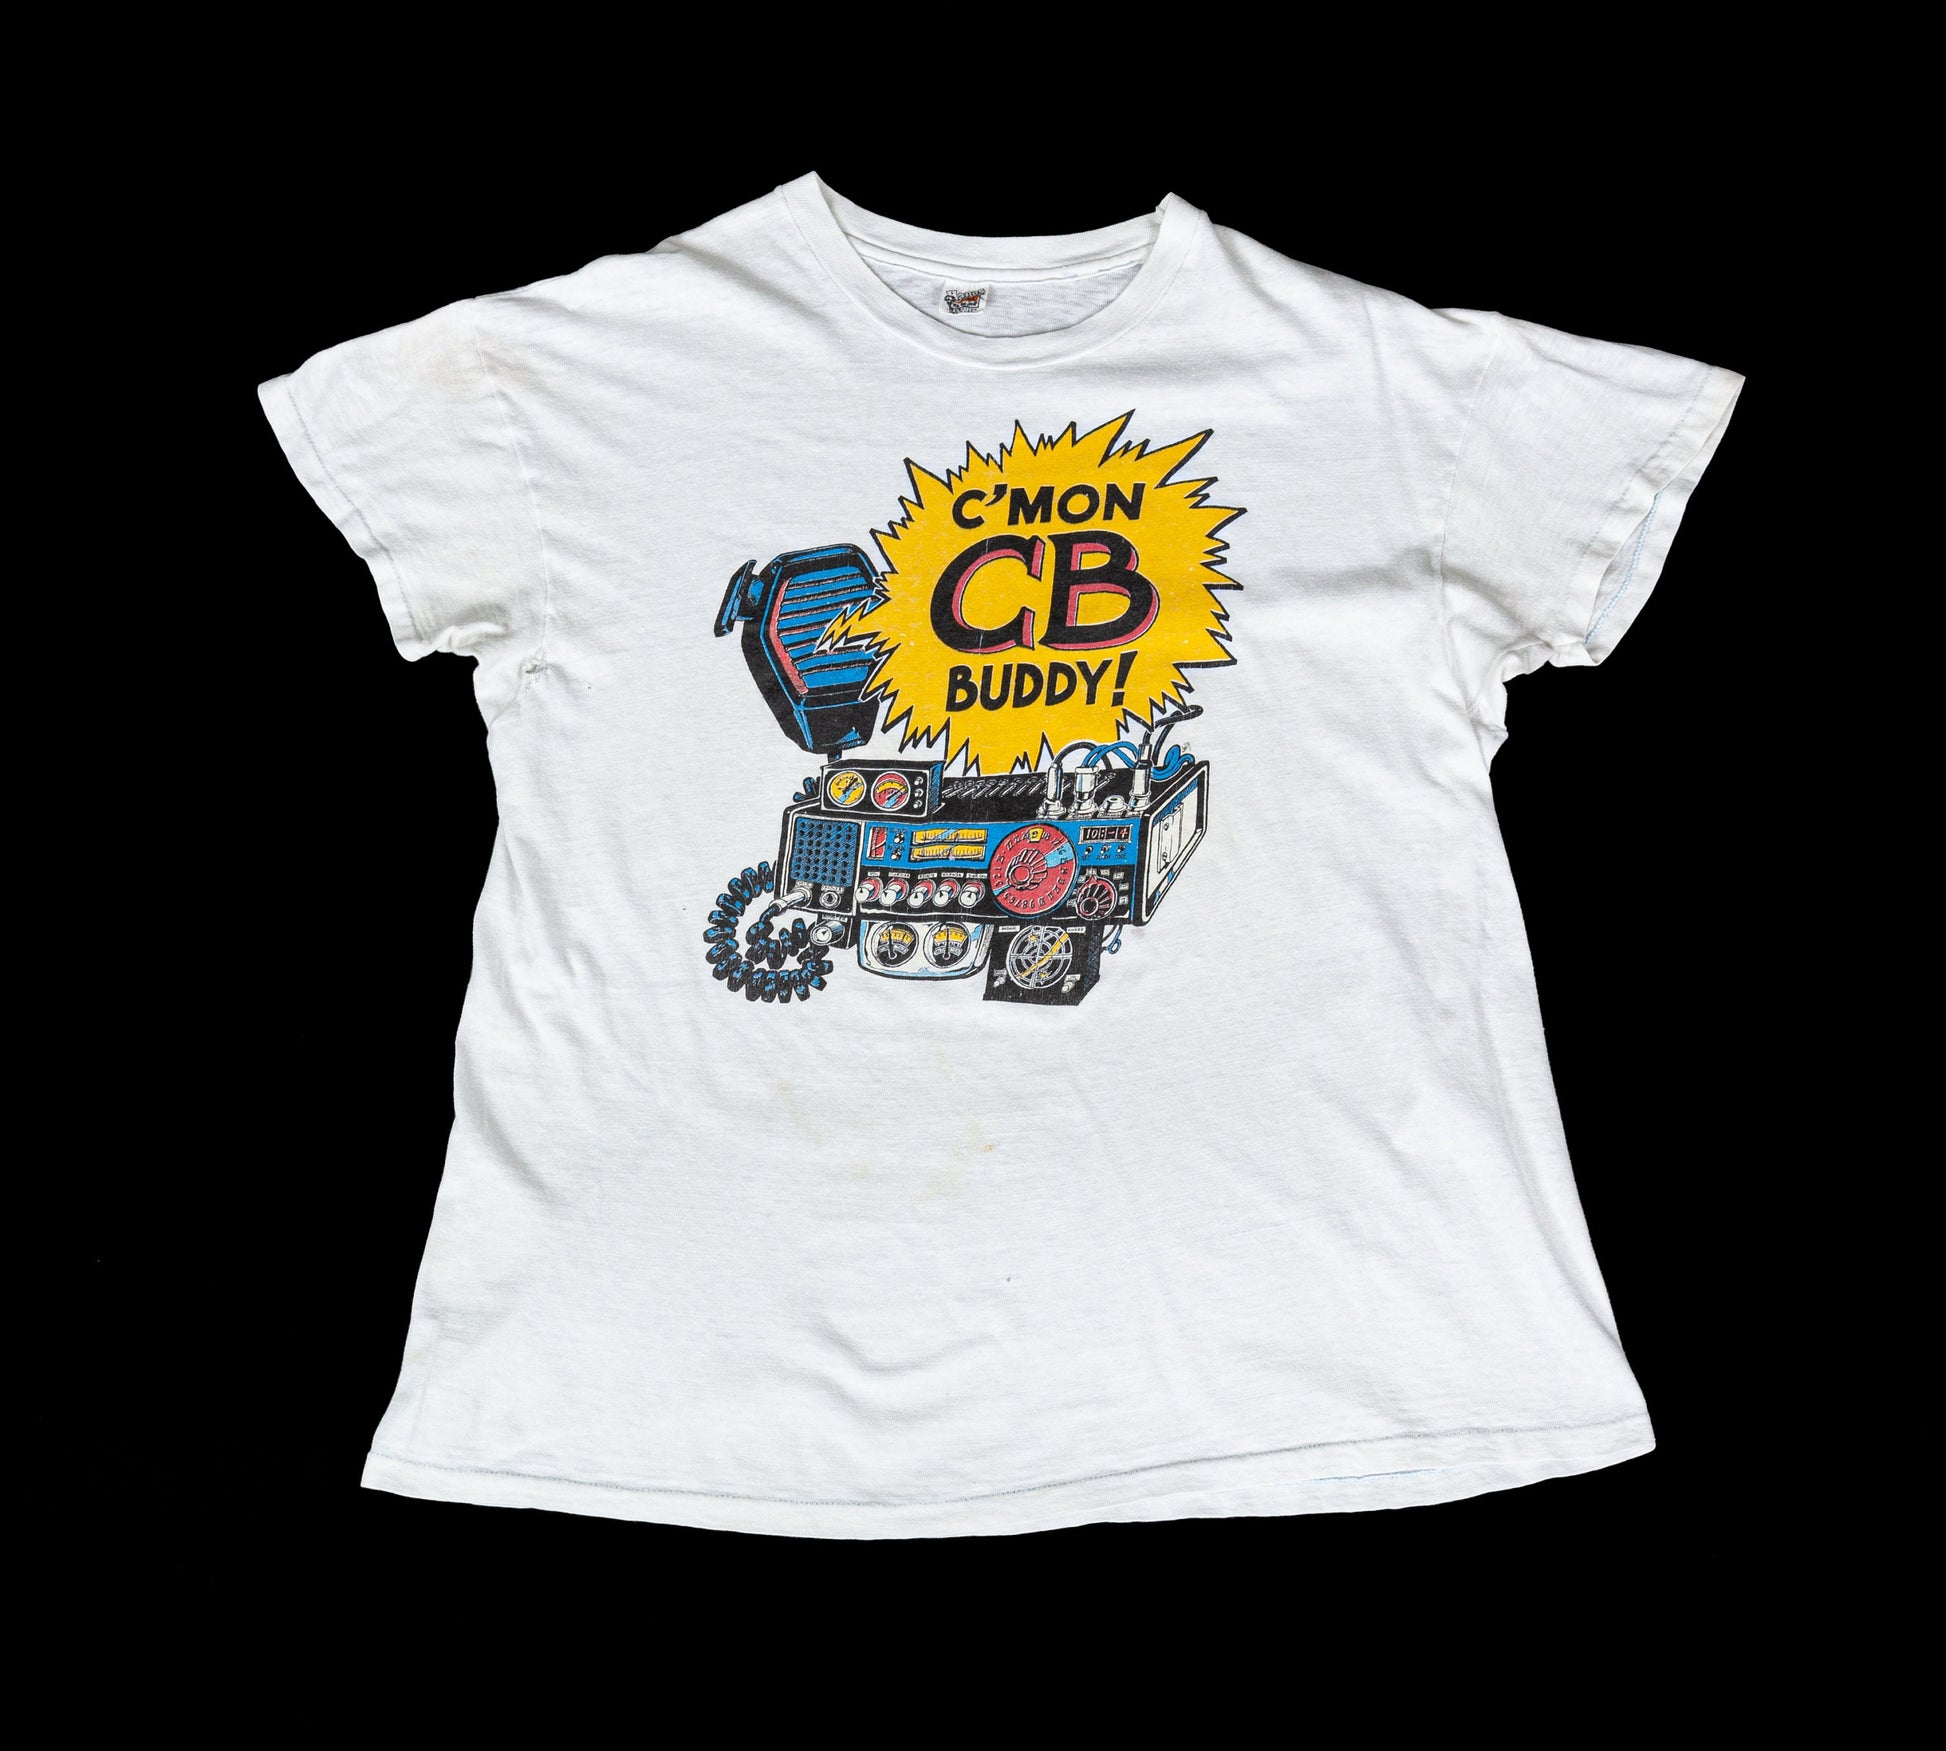 80s CB Radio "C'mon CB Buddy!" Graphic Tee - Men's Large, Women's XL 